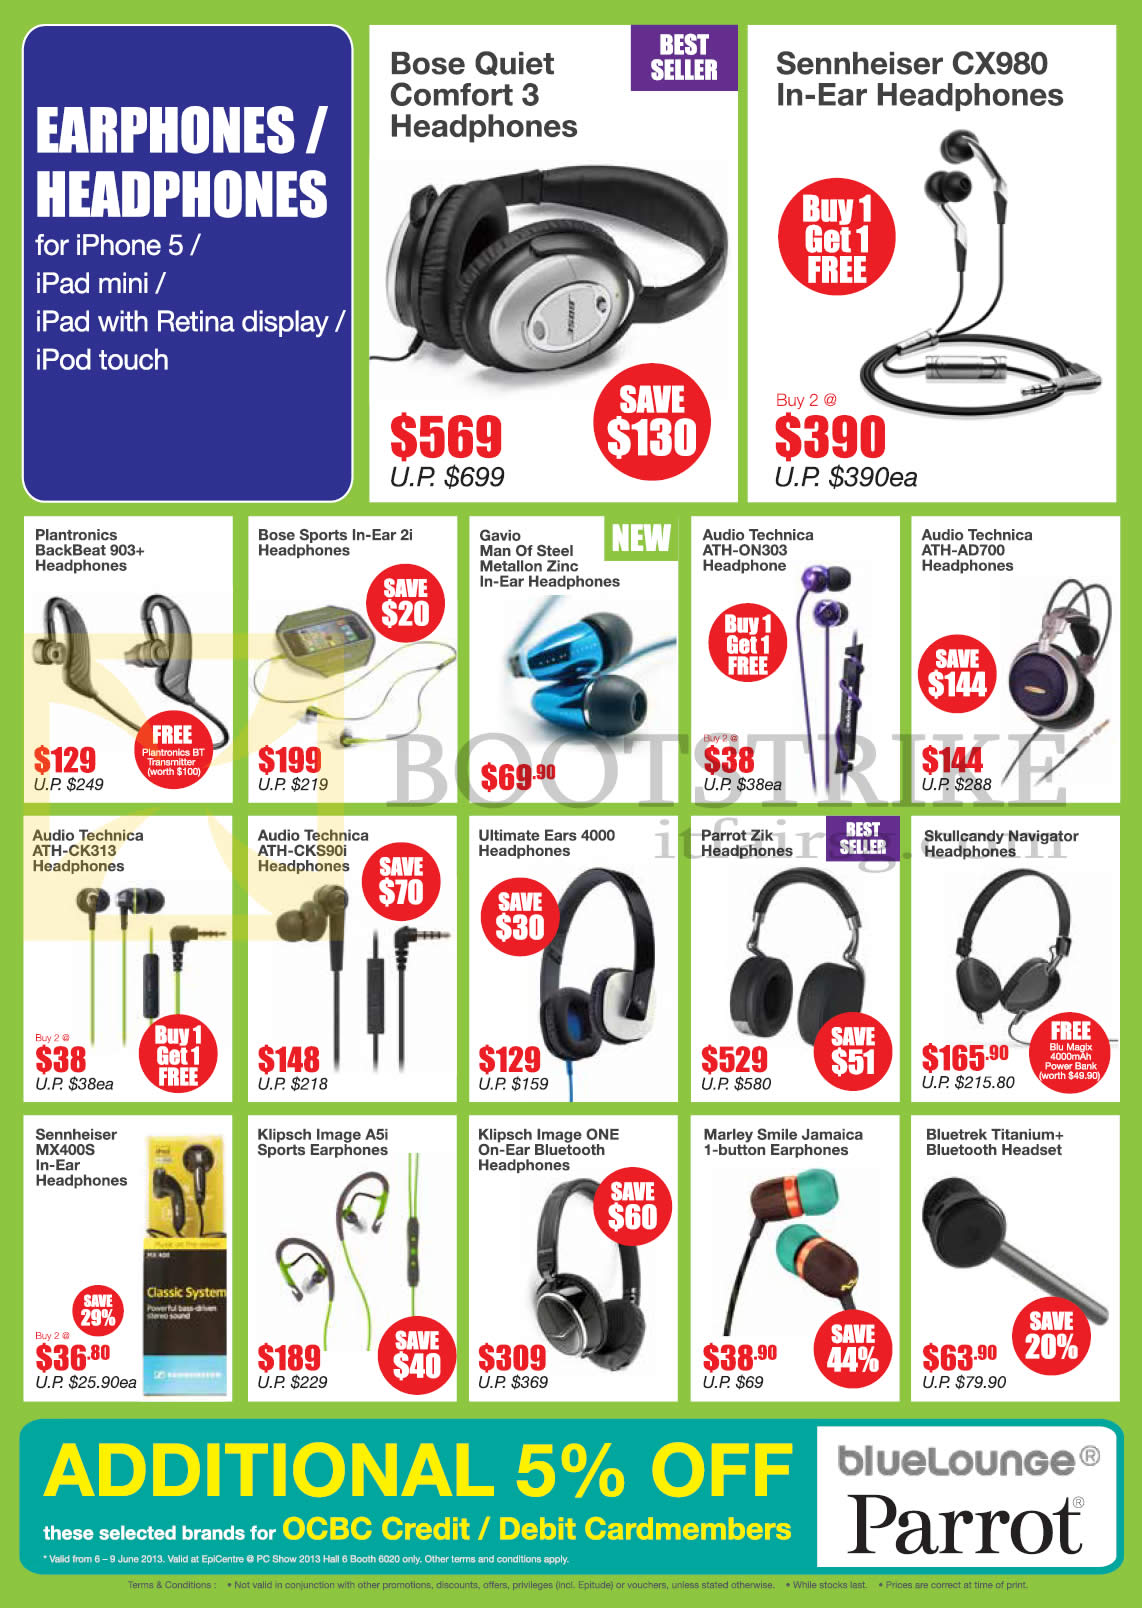 PC SHOW 2013 price list image brochure of EpiCentre Headphones, Earphones, Audio Technica, Plantronics, Klipsch, Marley, Bluetrek, Gavio, Skullcandy, Parrot, Ultimate Ears, Sennheiser